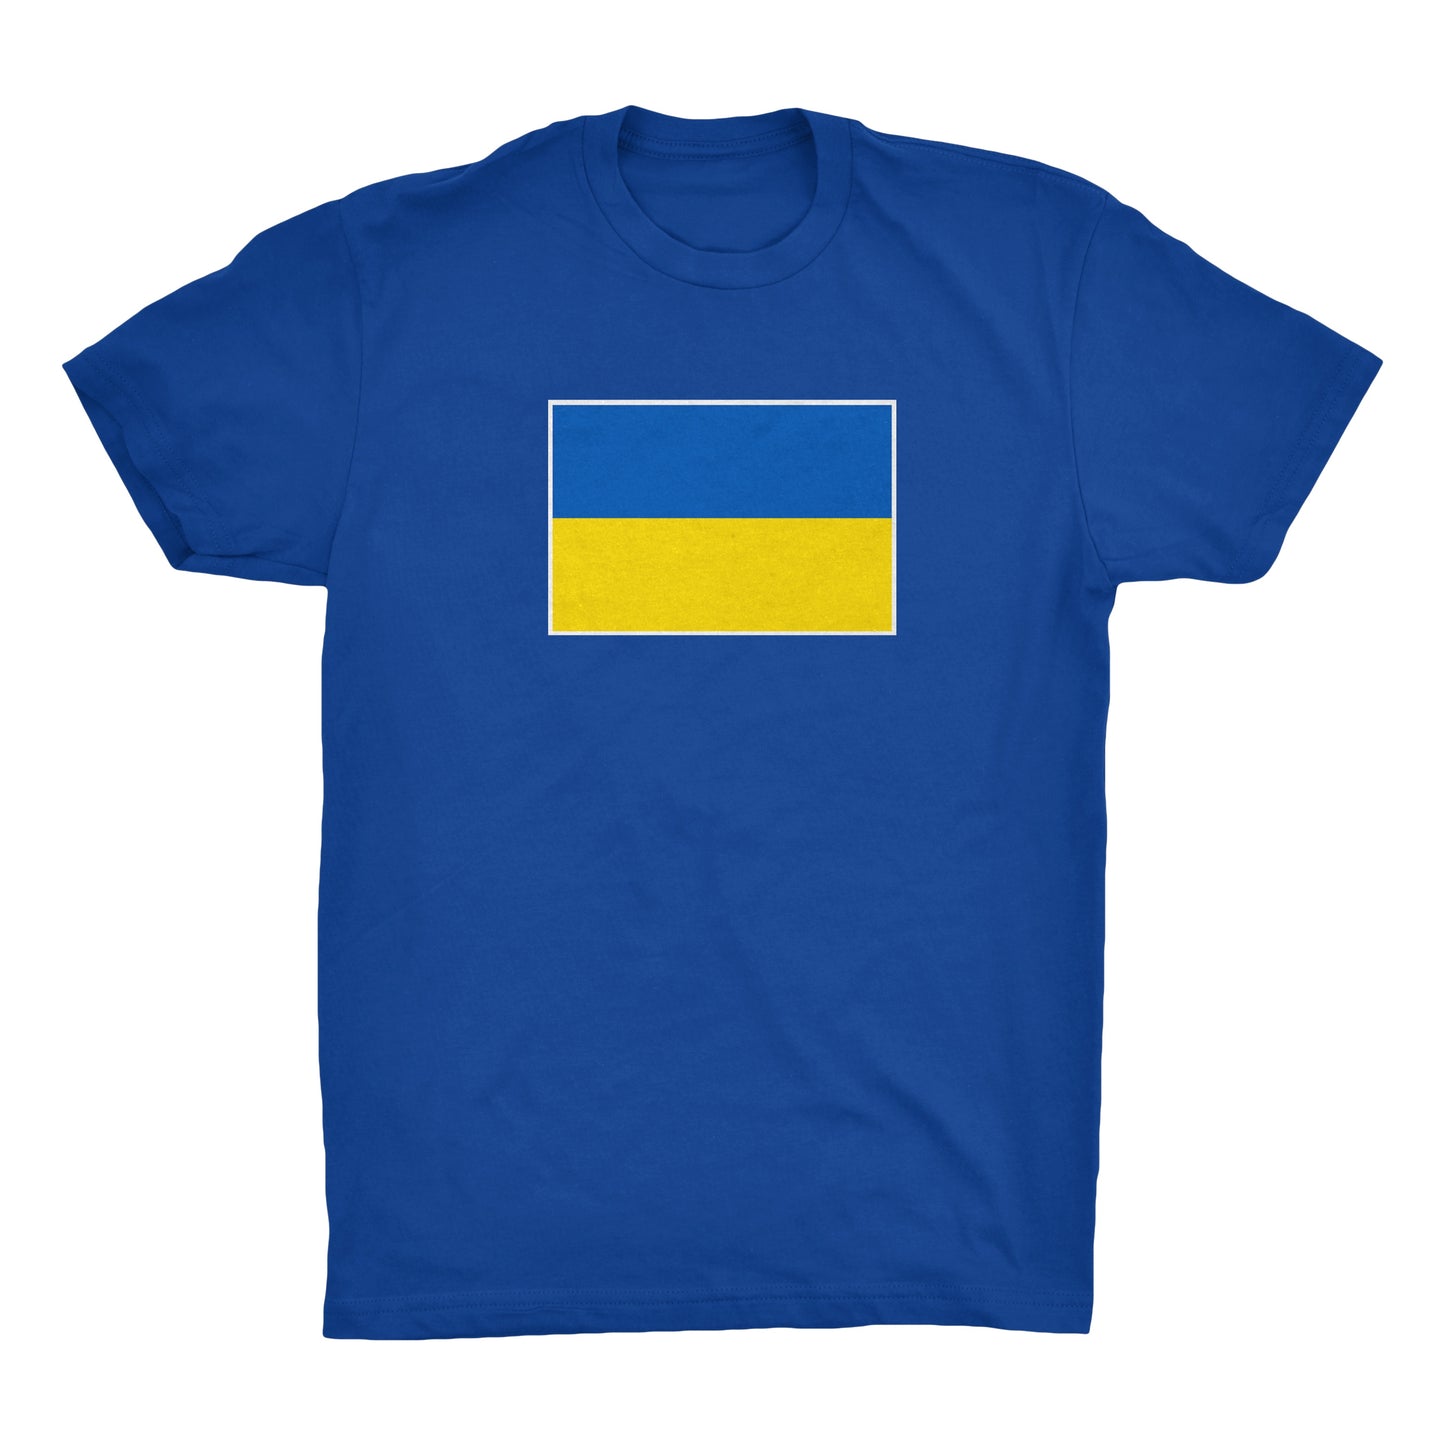 Aid for the Ukrainian People- Ukrainian Flag on a Blue Shirt